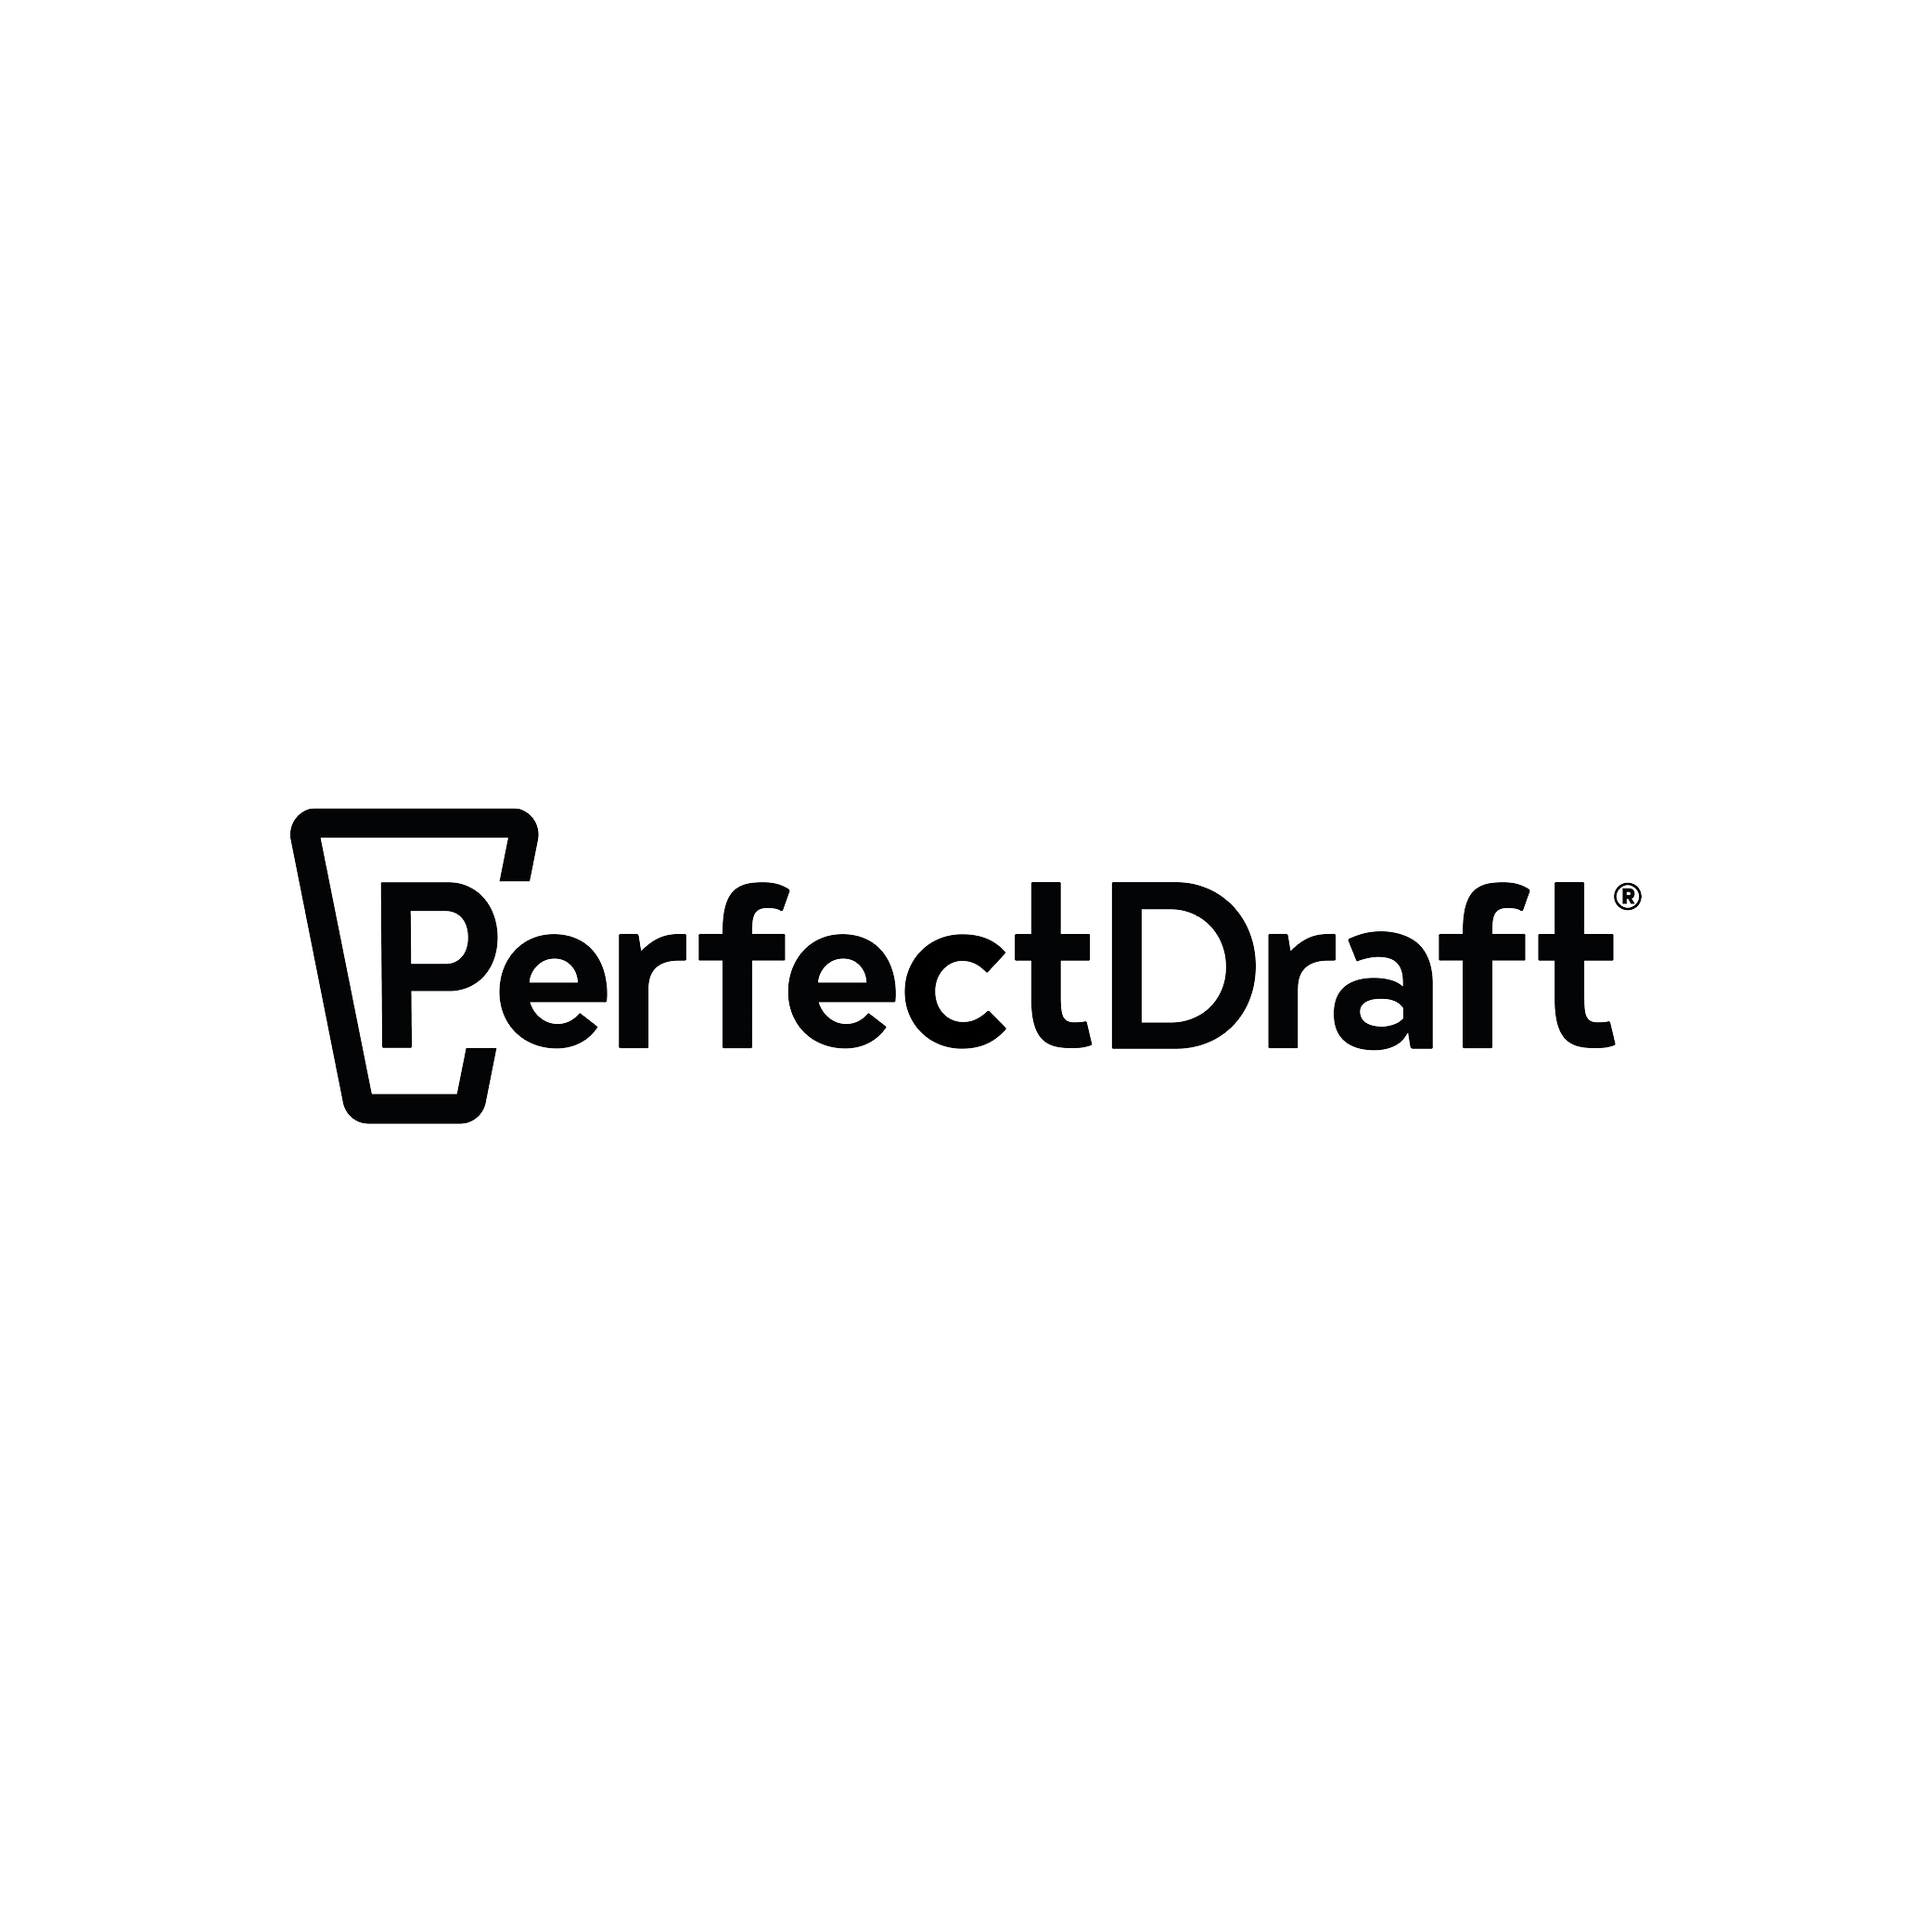 PerfectDraft Codice Promo Spedizione GRATIS Coupons & Promo Codes